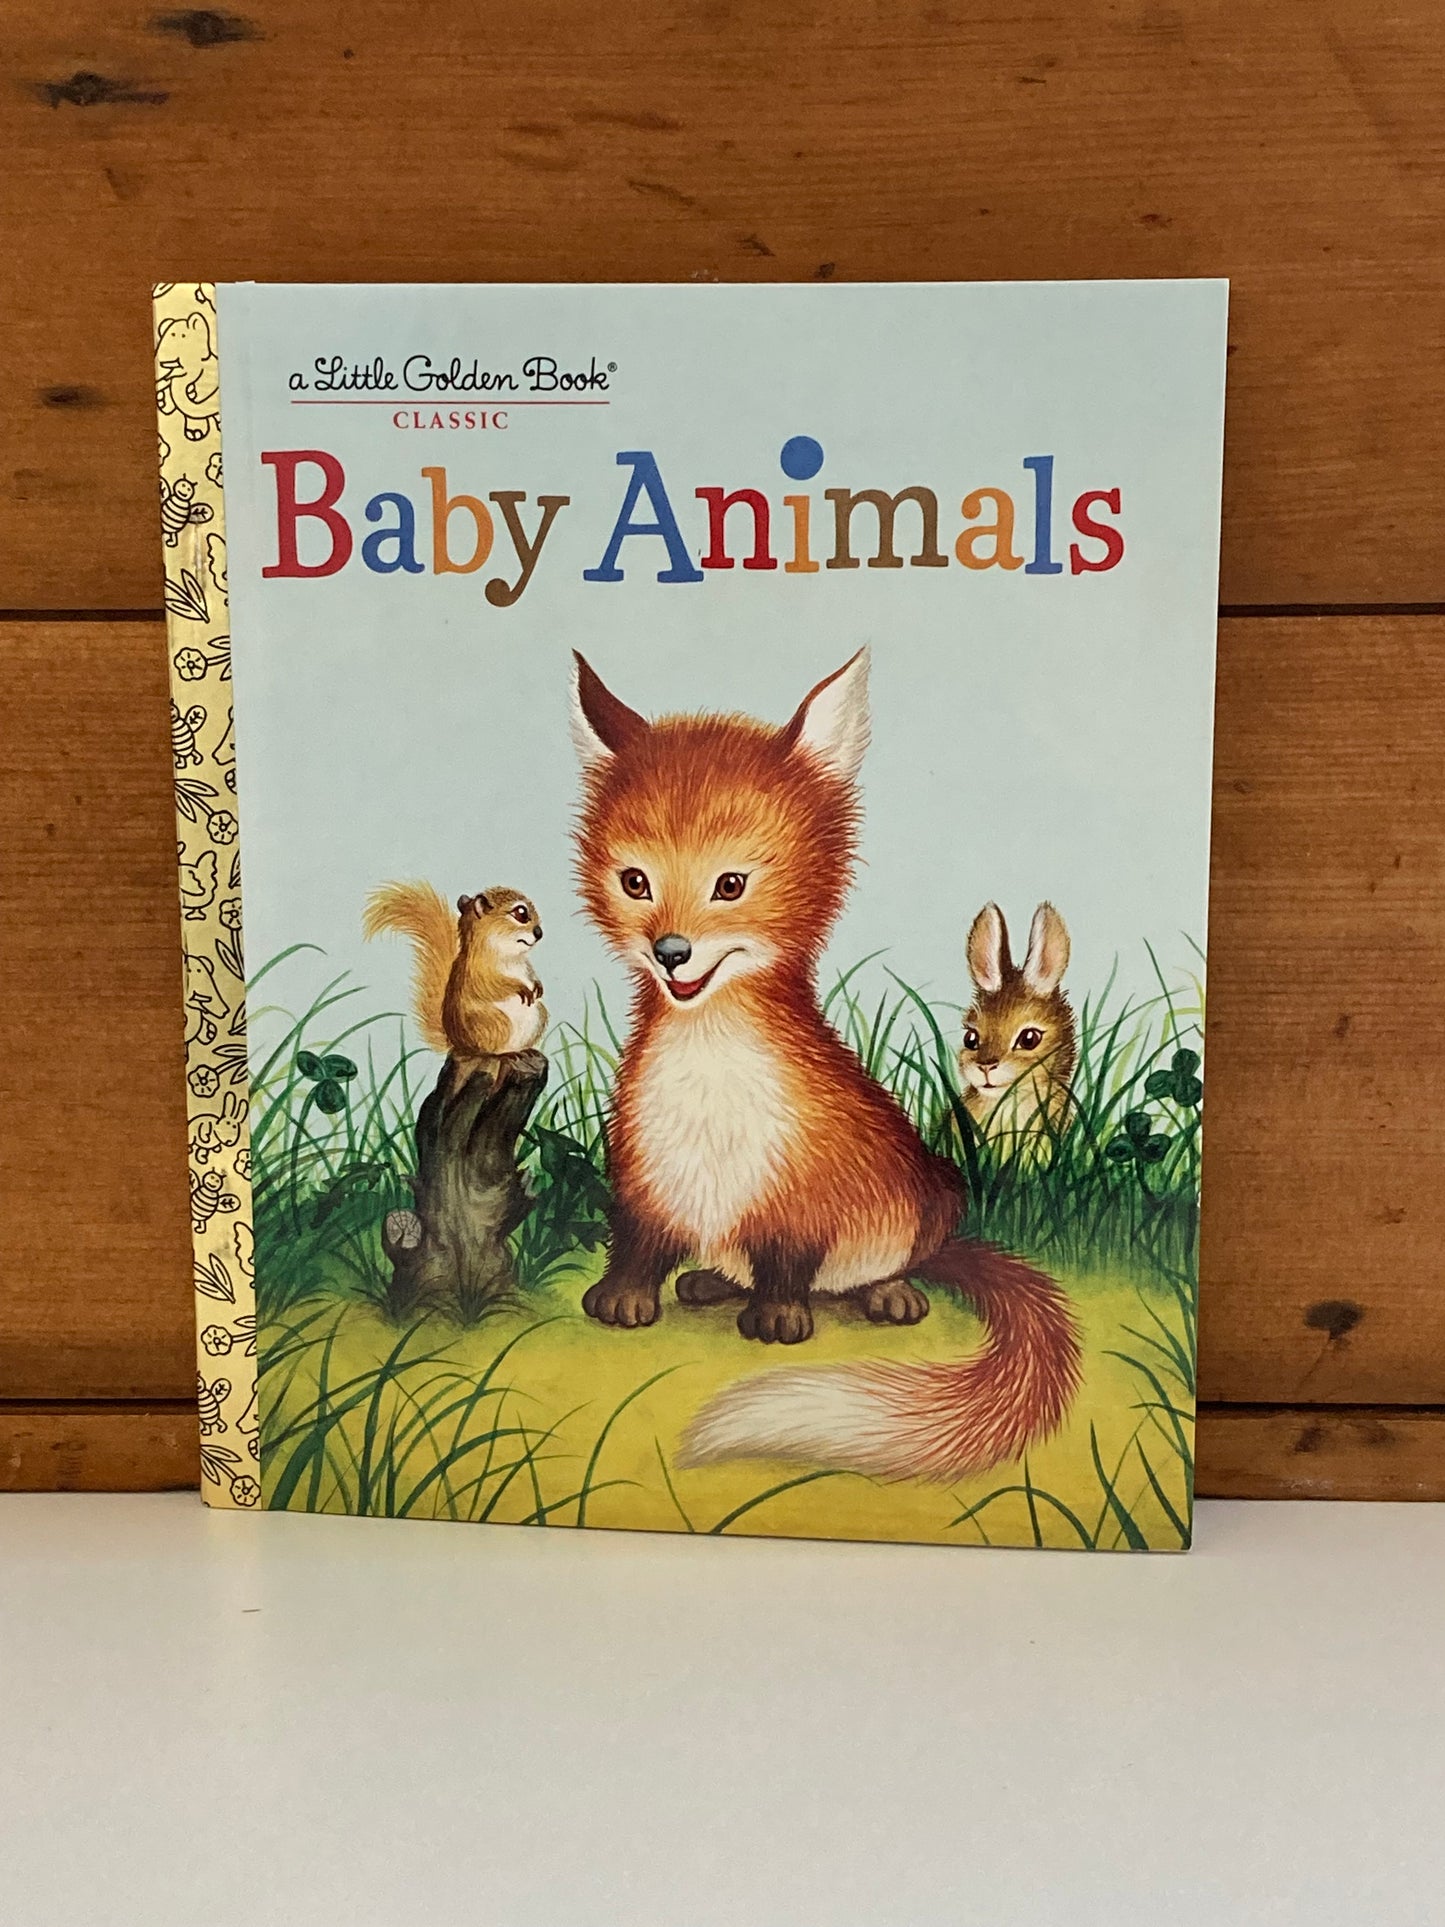 Board Book, Baby - BABY ANIMALS by Garth Williams